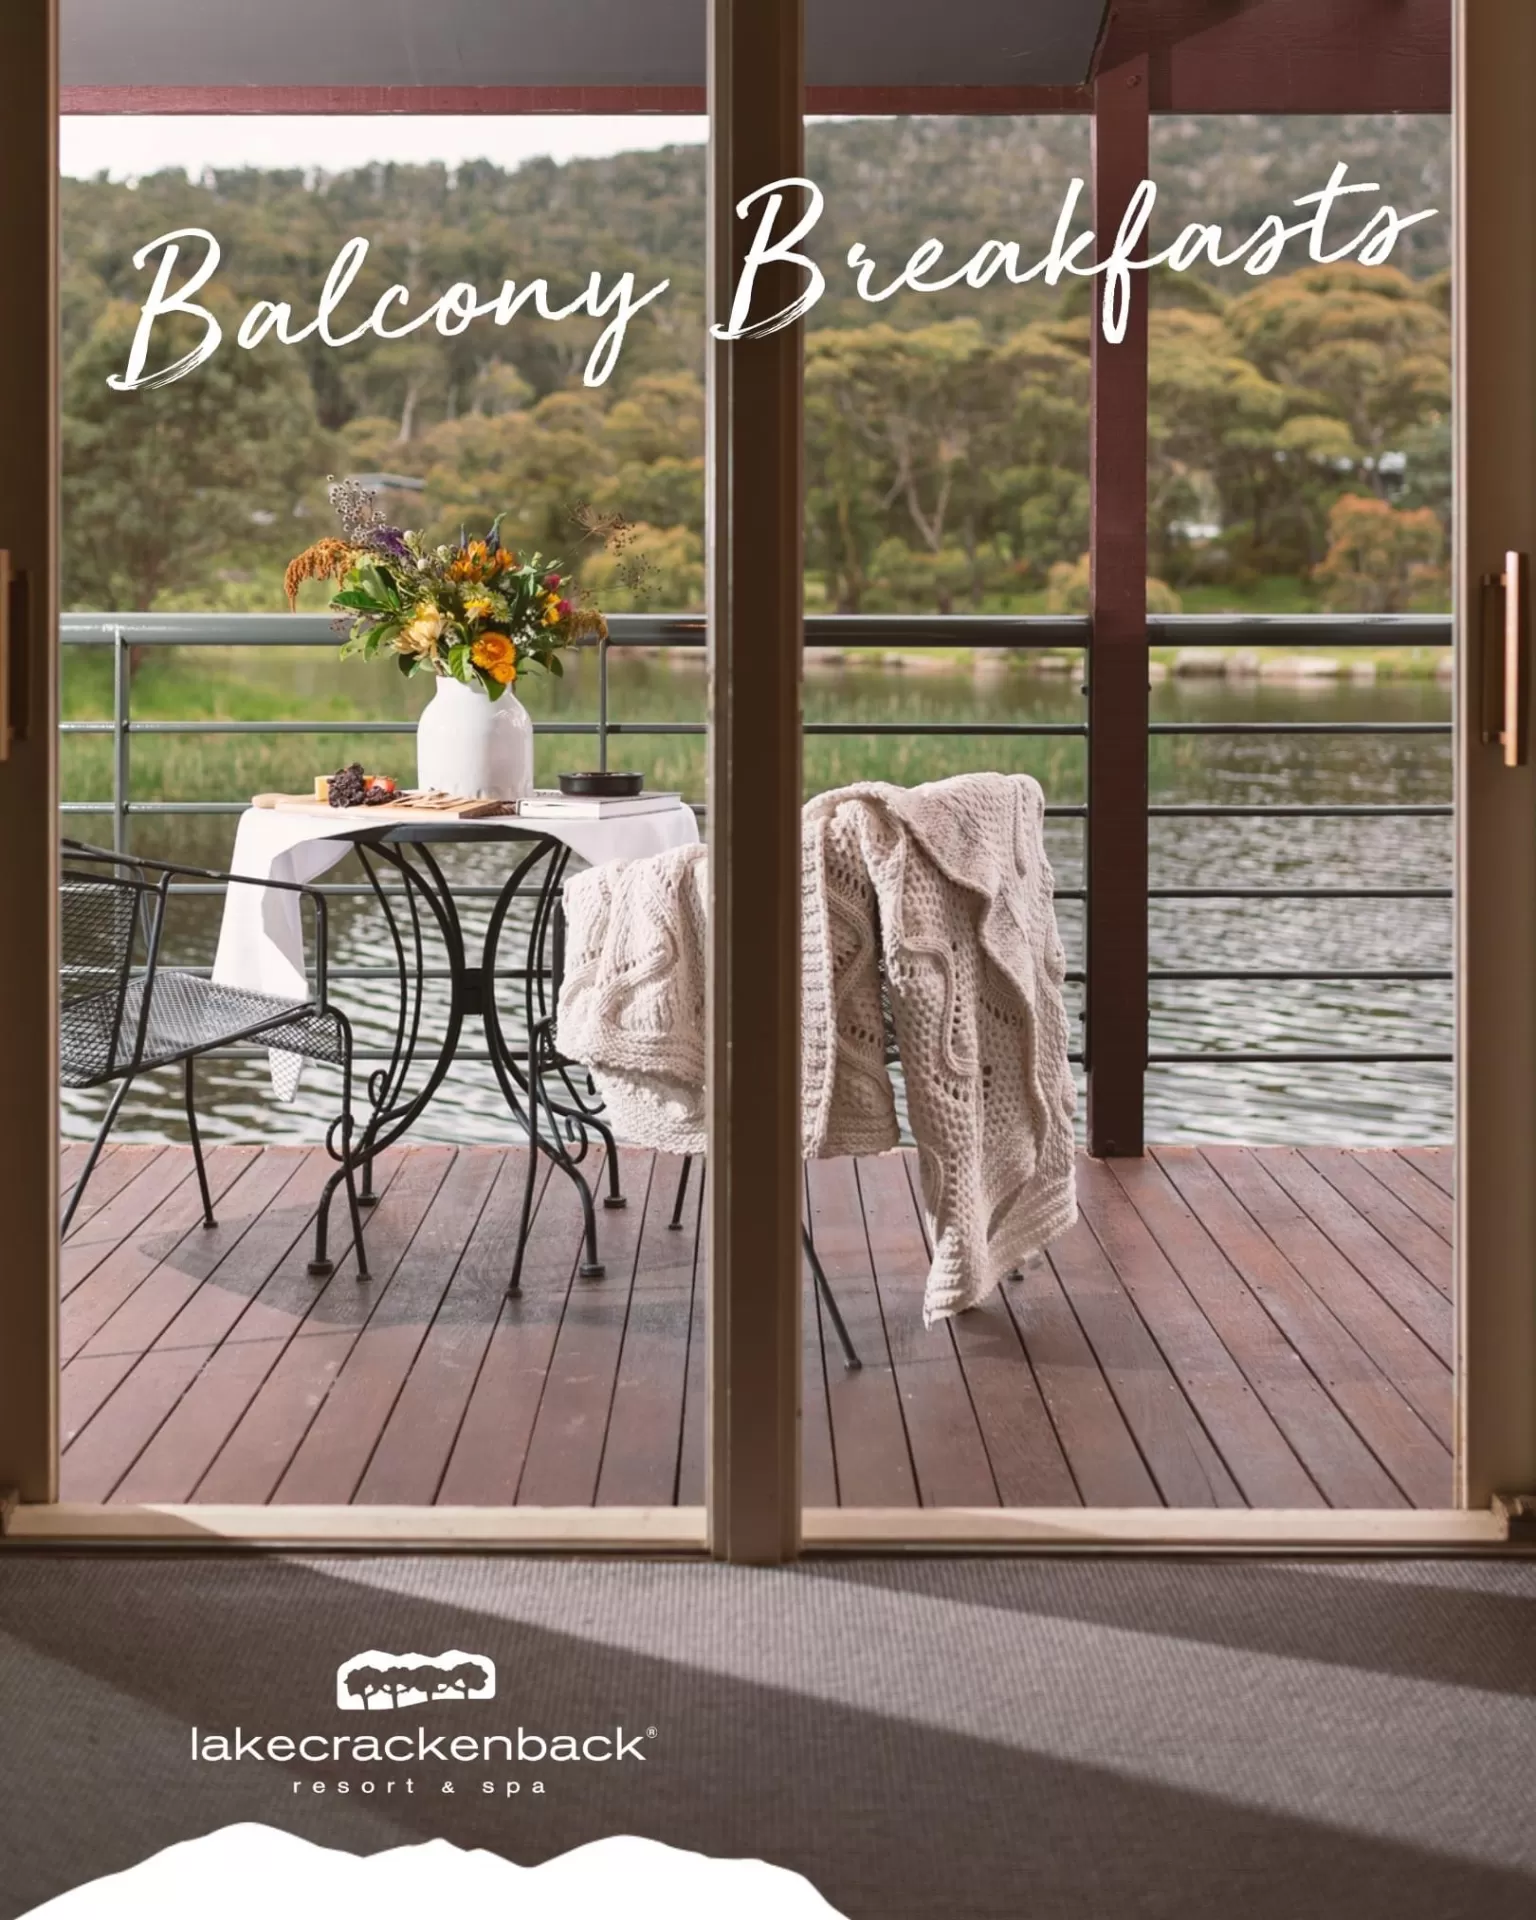 Balcony Breakfast image